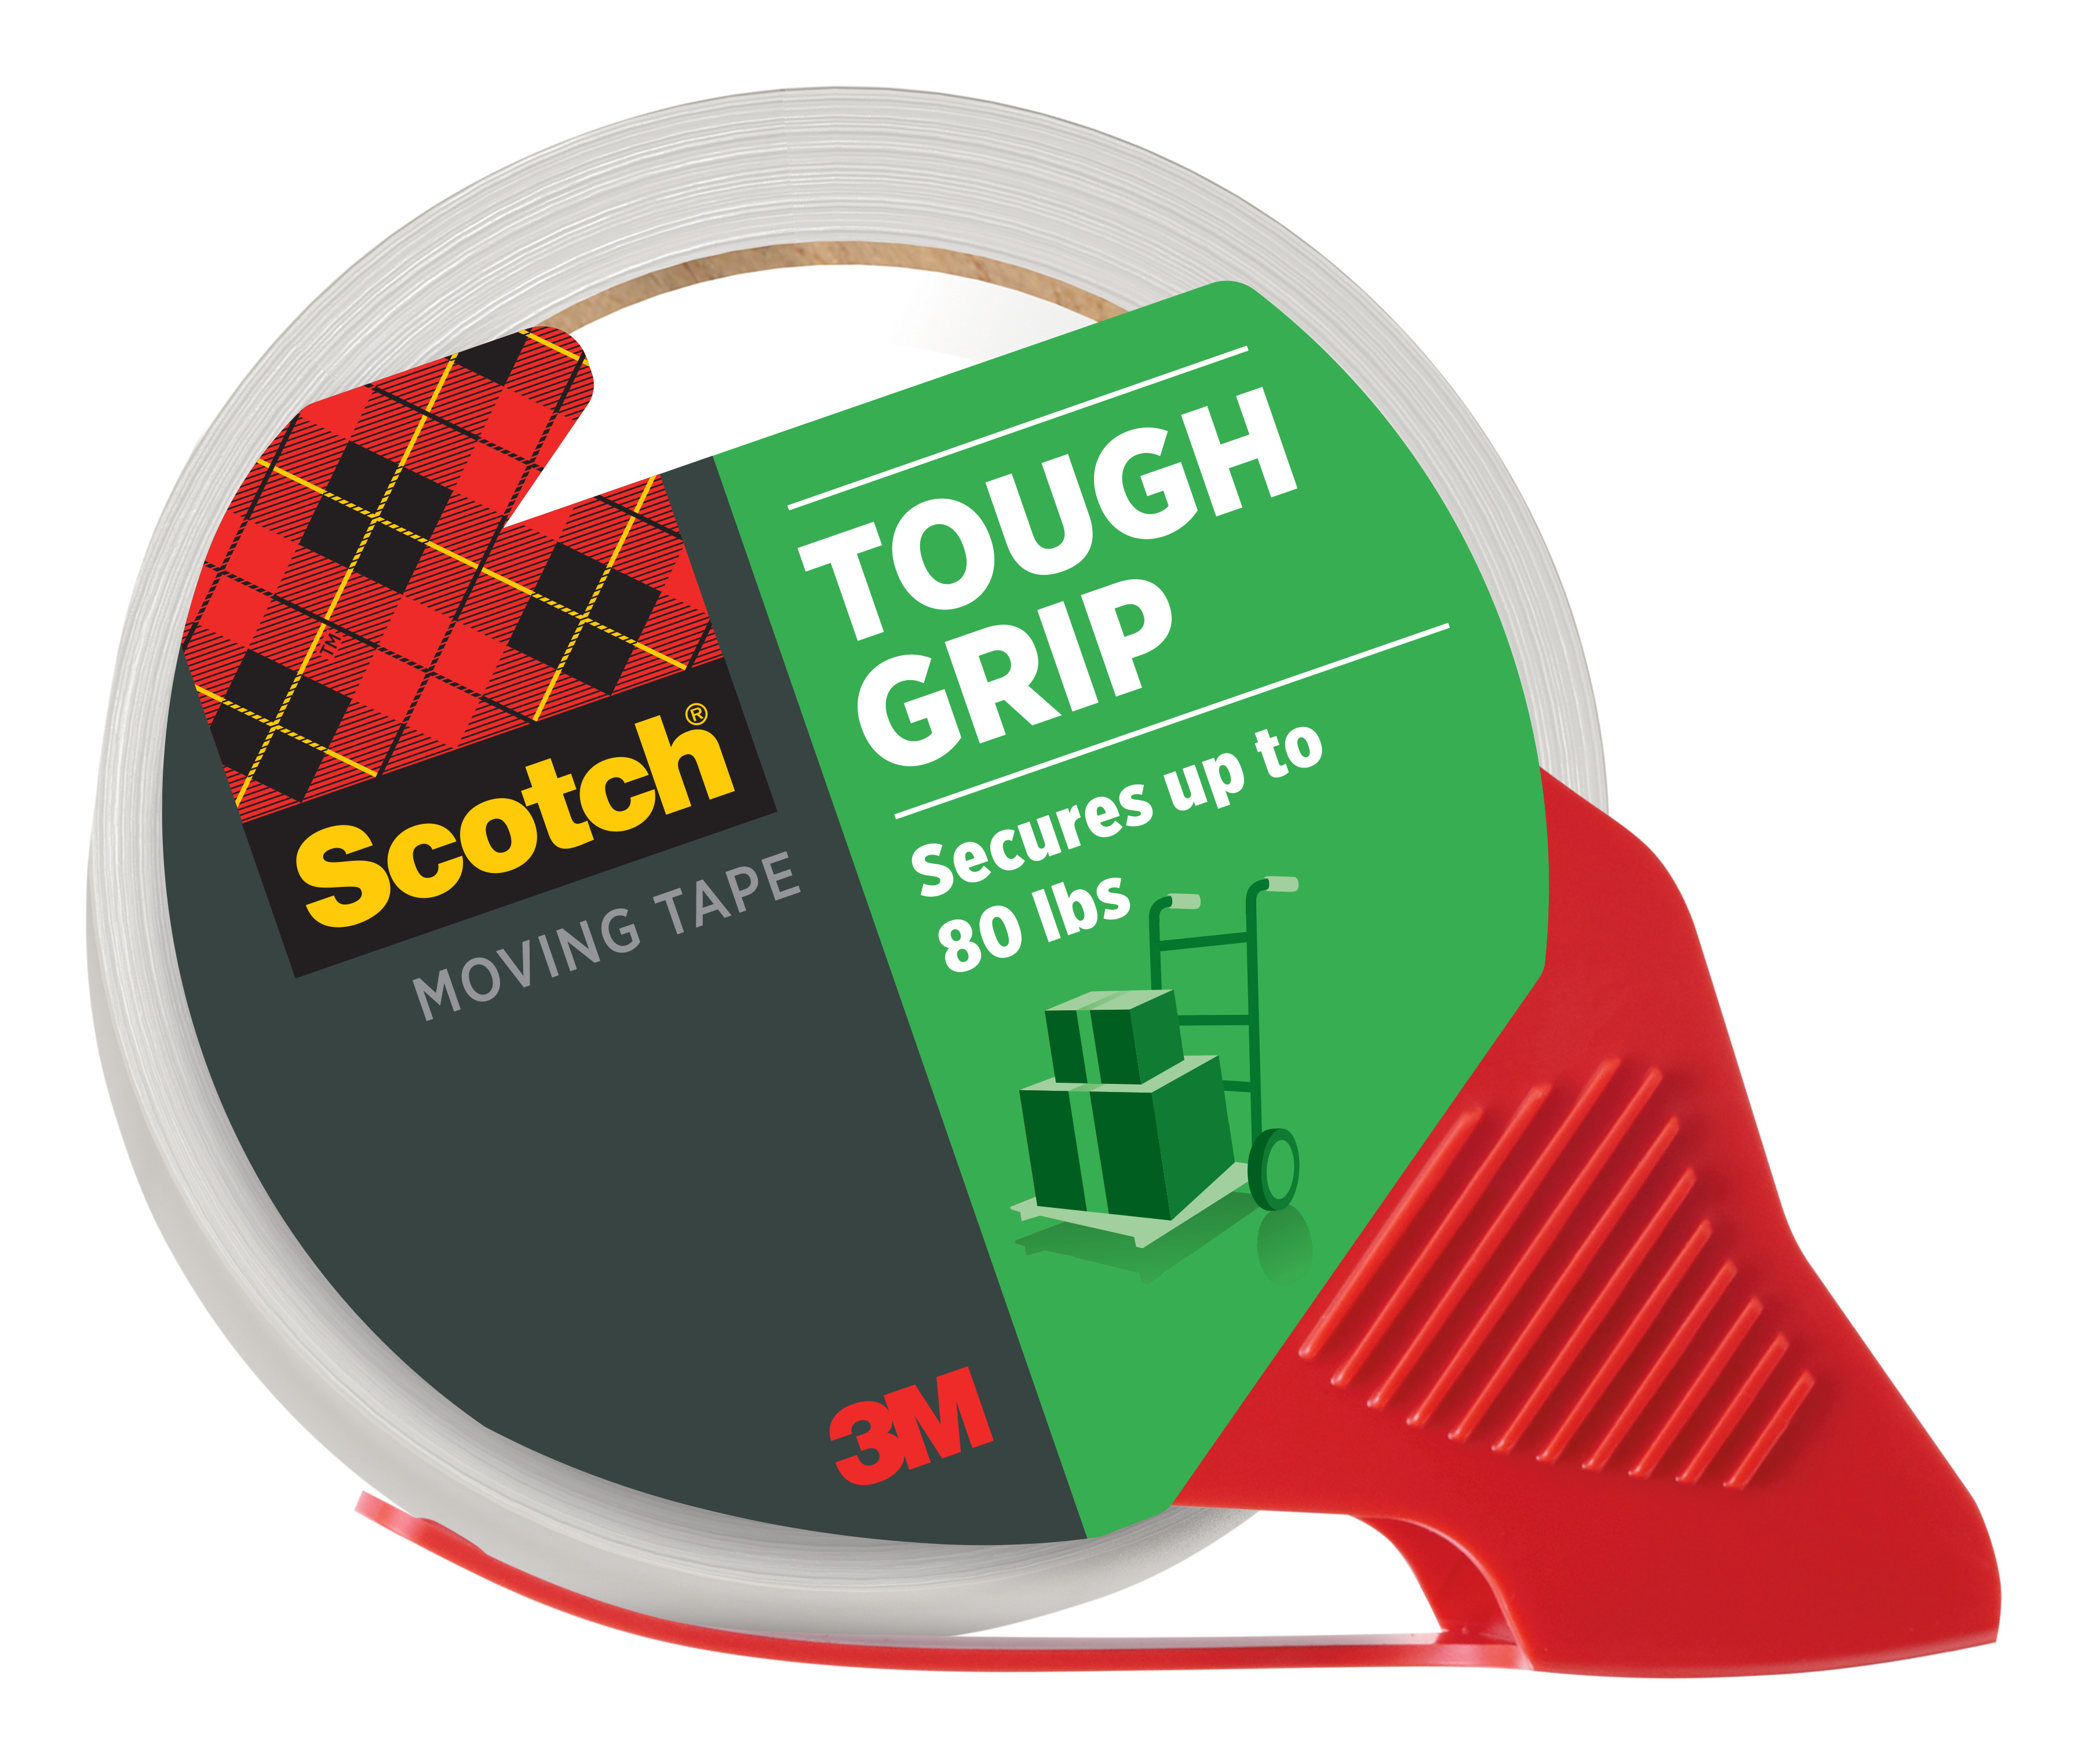 SKU 7100247520 | Scotch® Moving Tough Grip Packaging Tape 3500S-RD-36GC